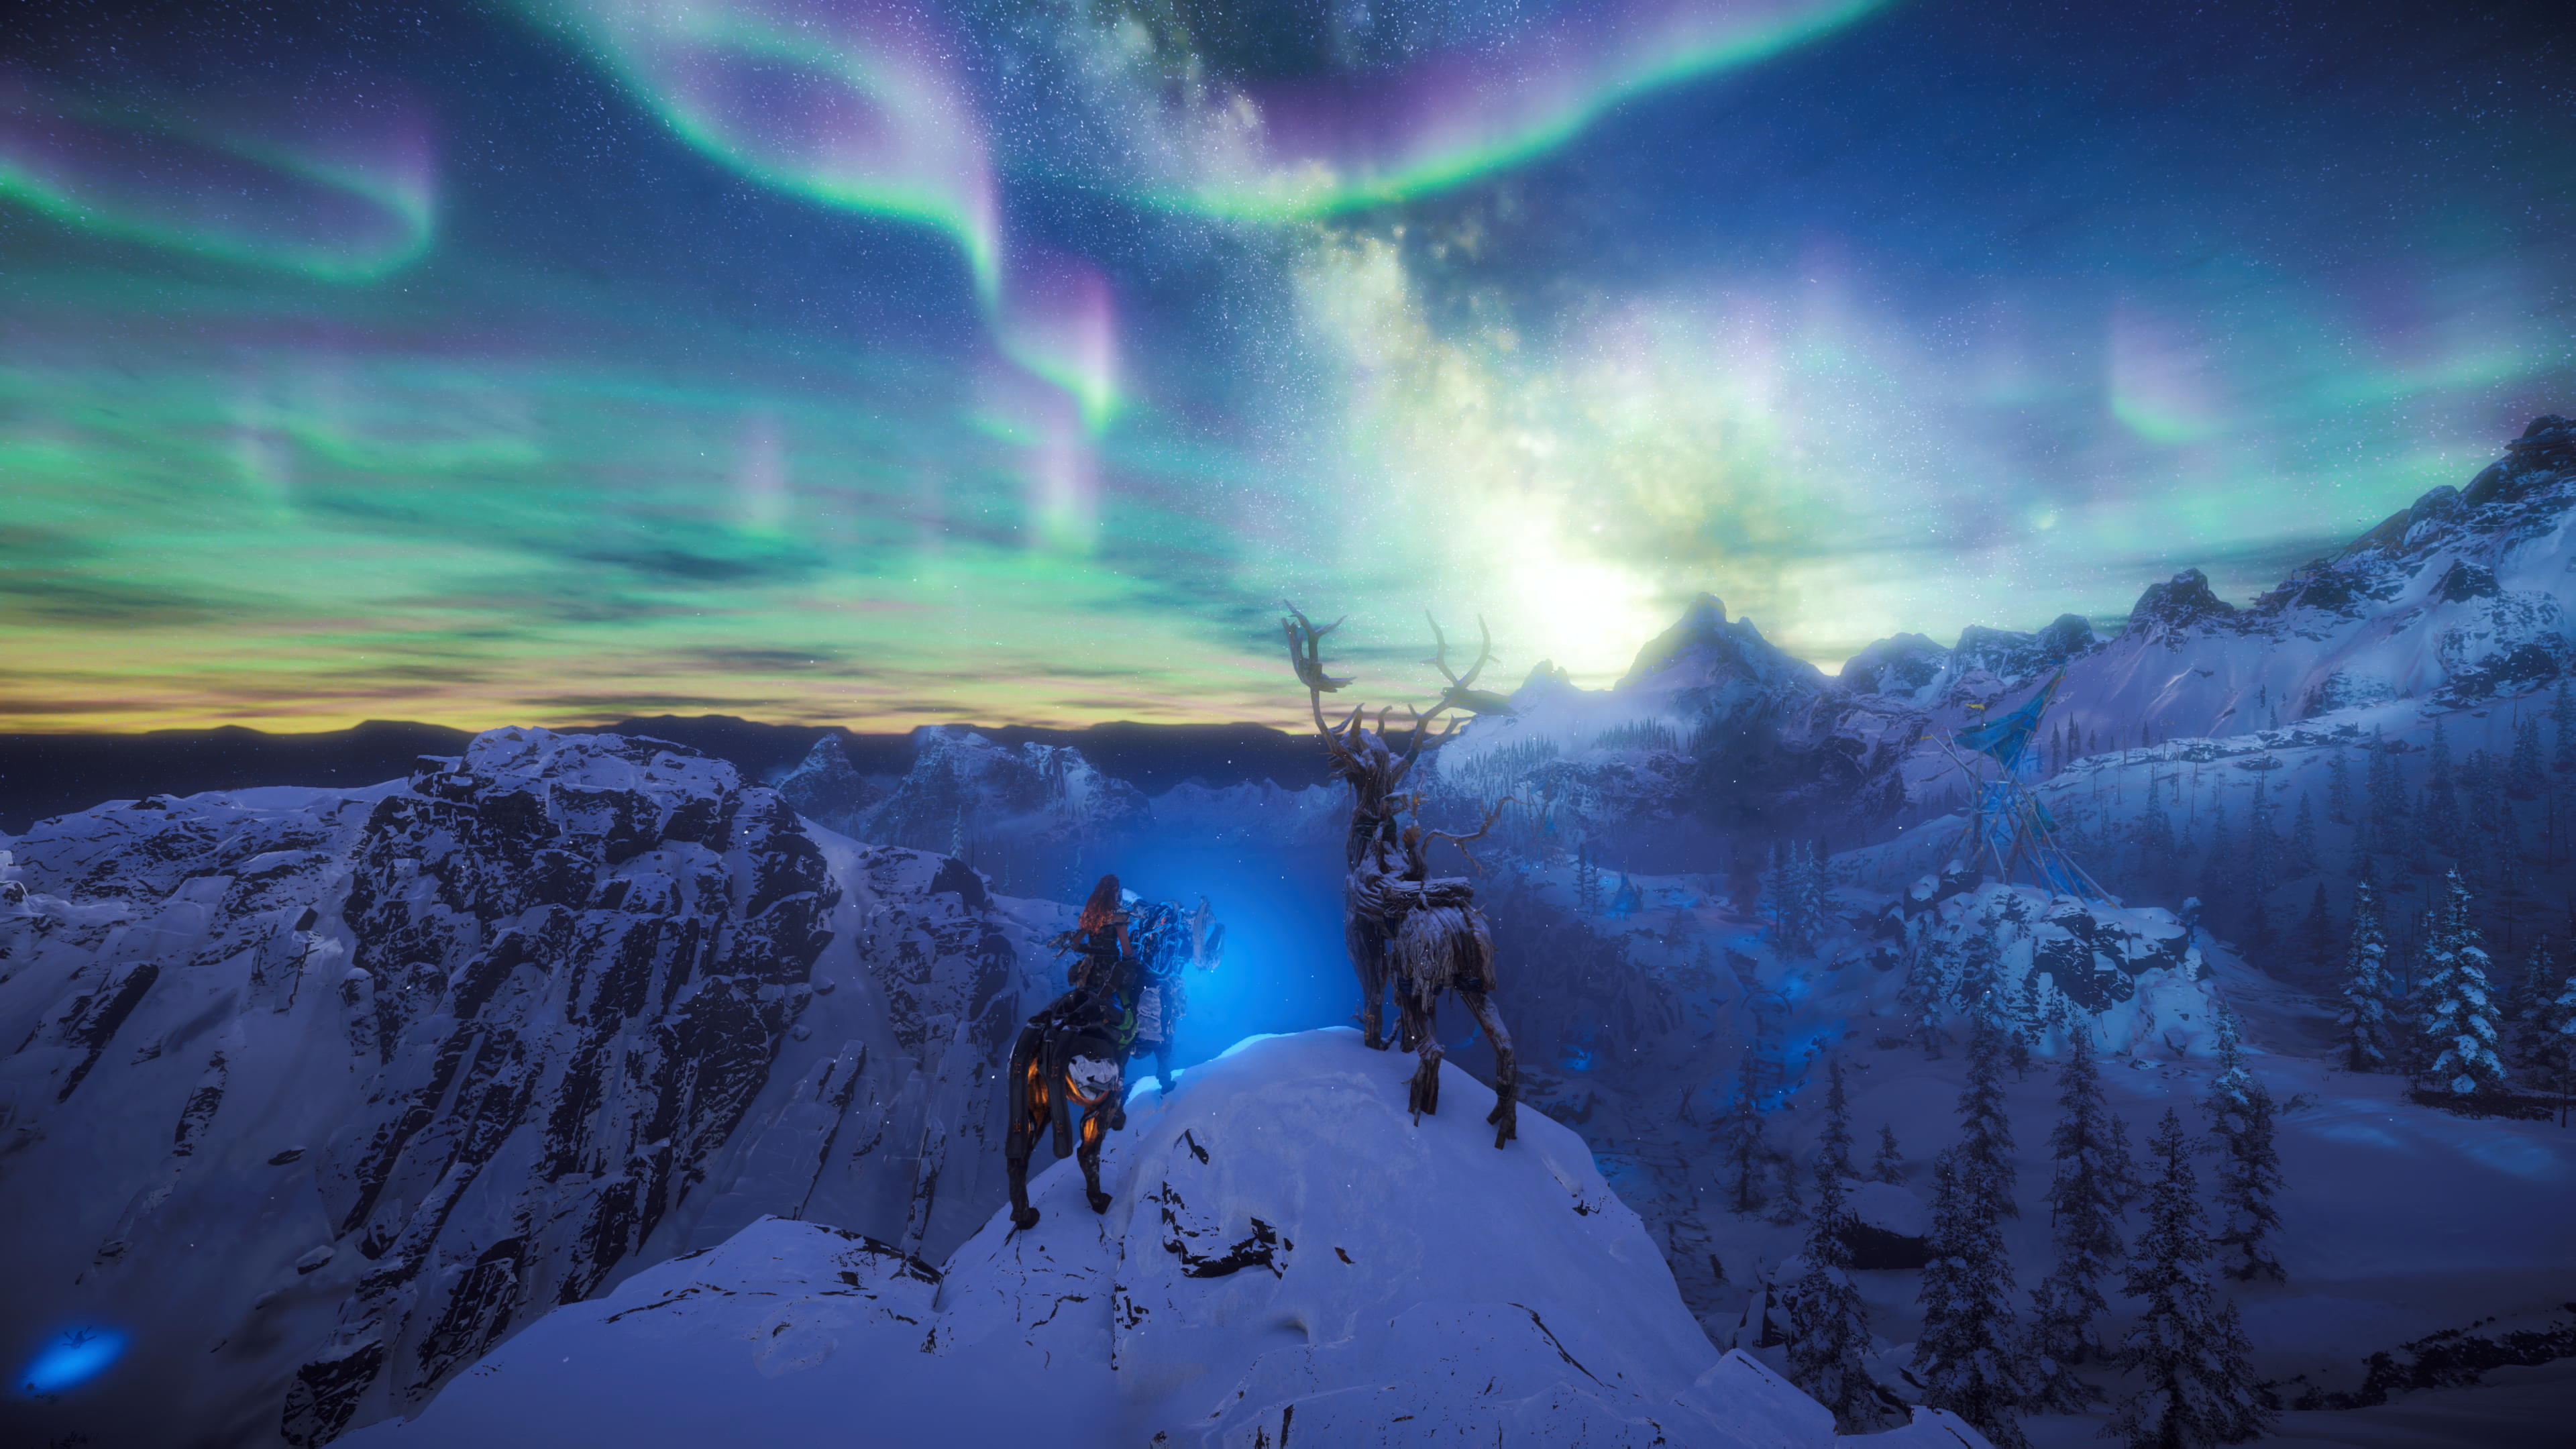 Horizon Zero Dawn: The Frozen Wilds][Screenshot] Well the game